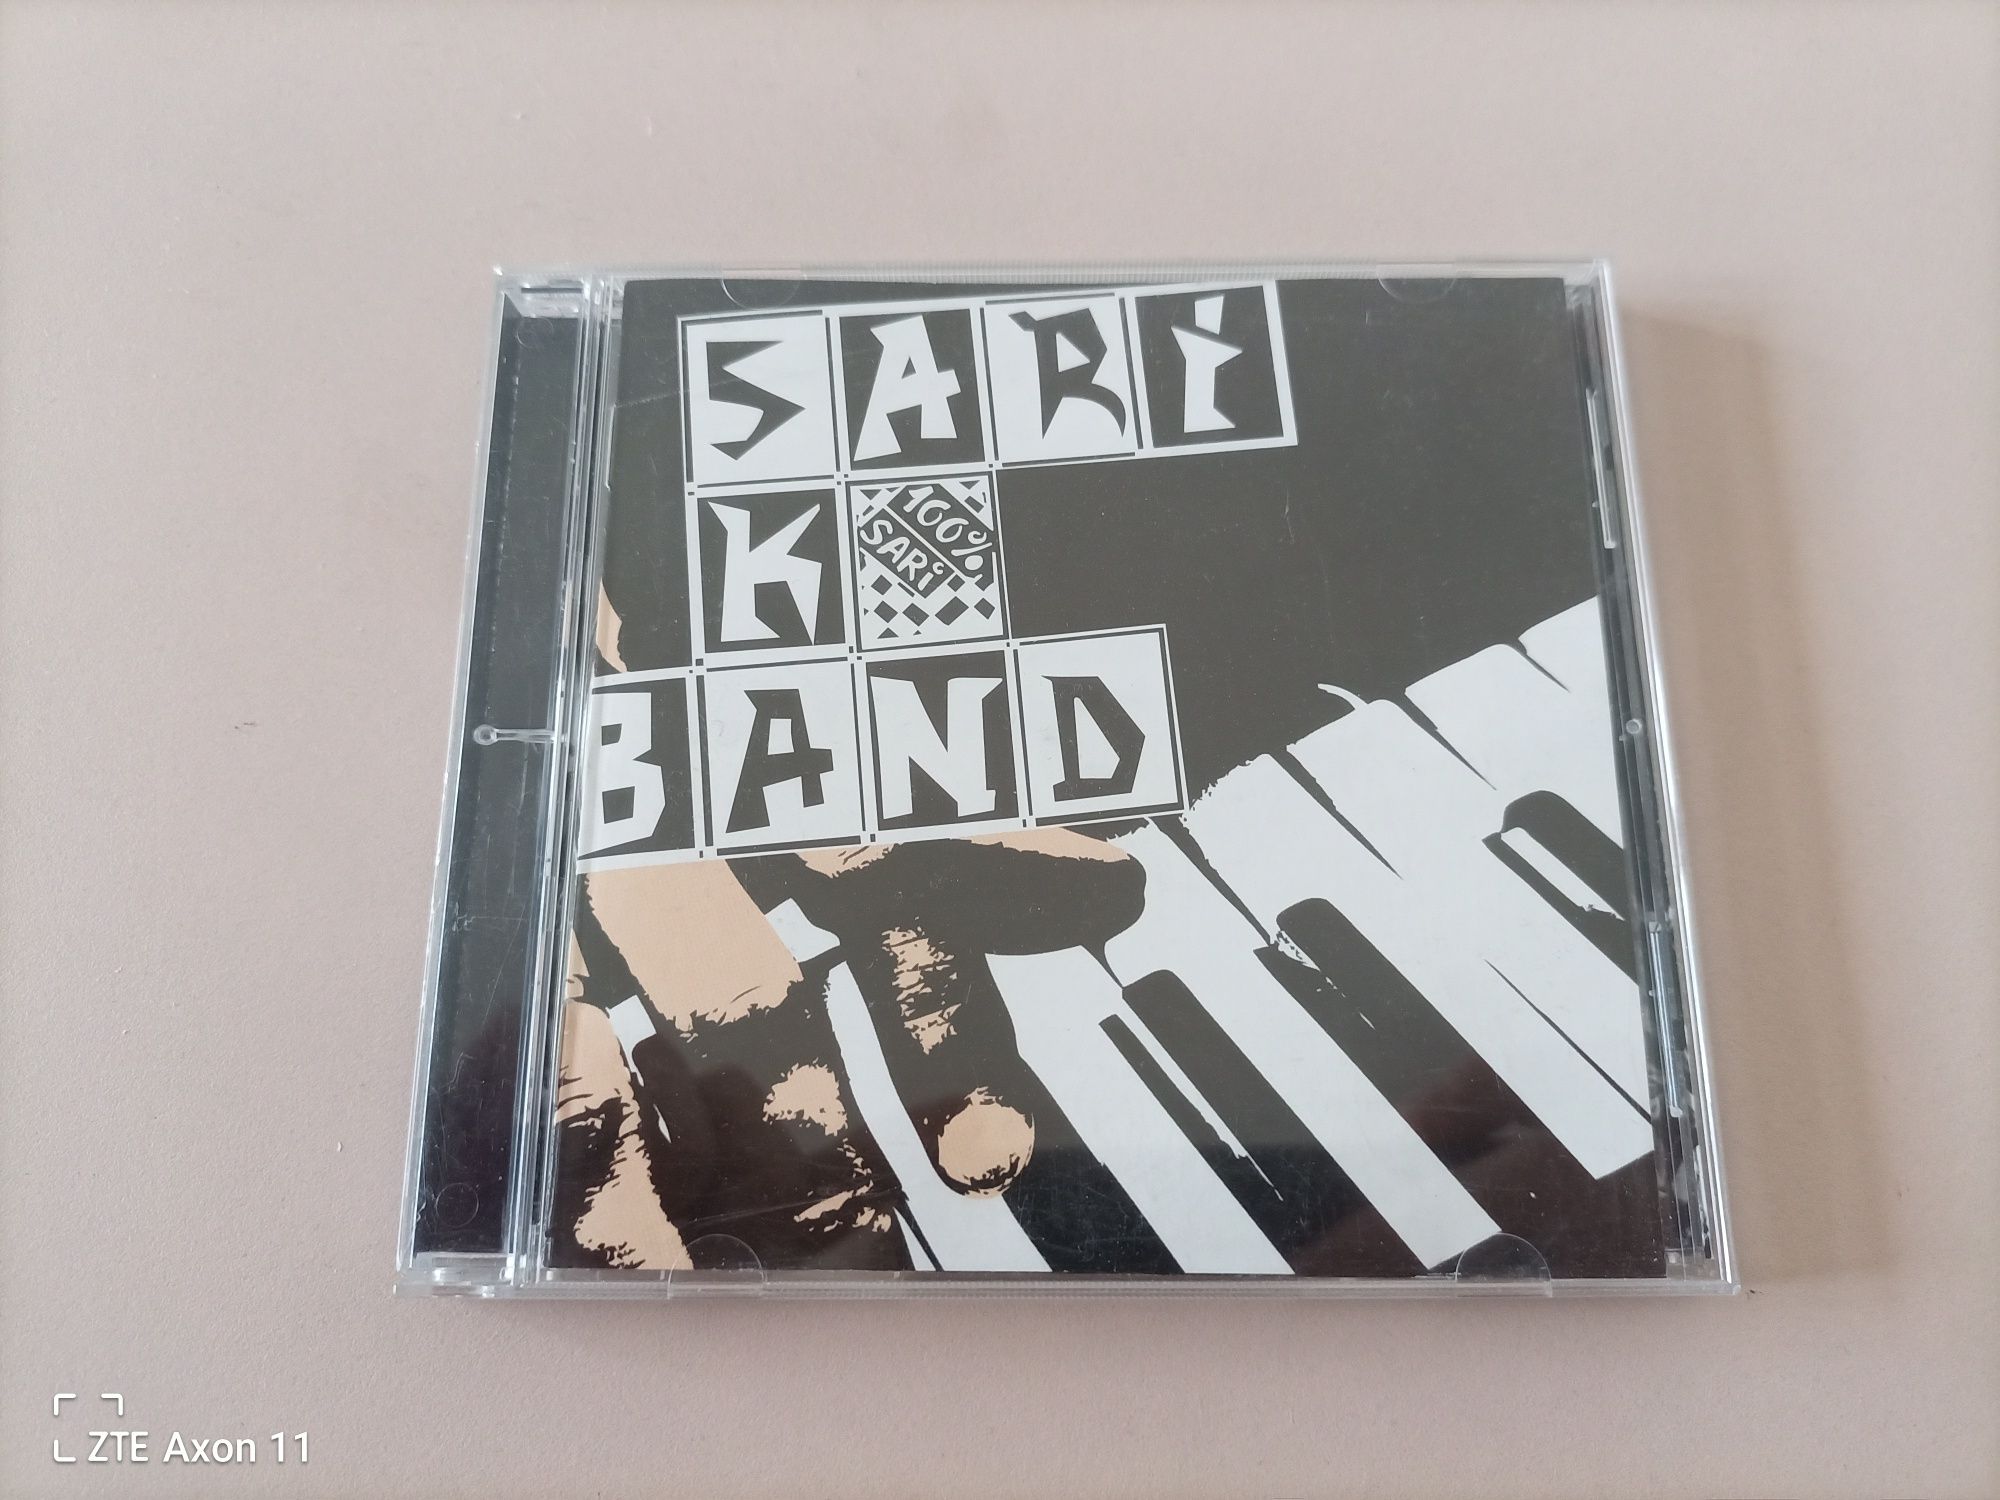 Płyta CD Sari ska band